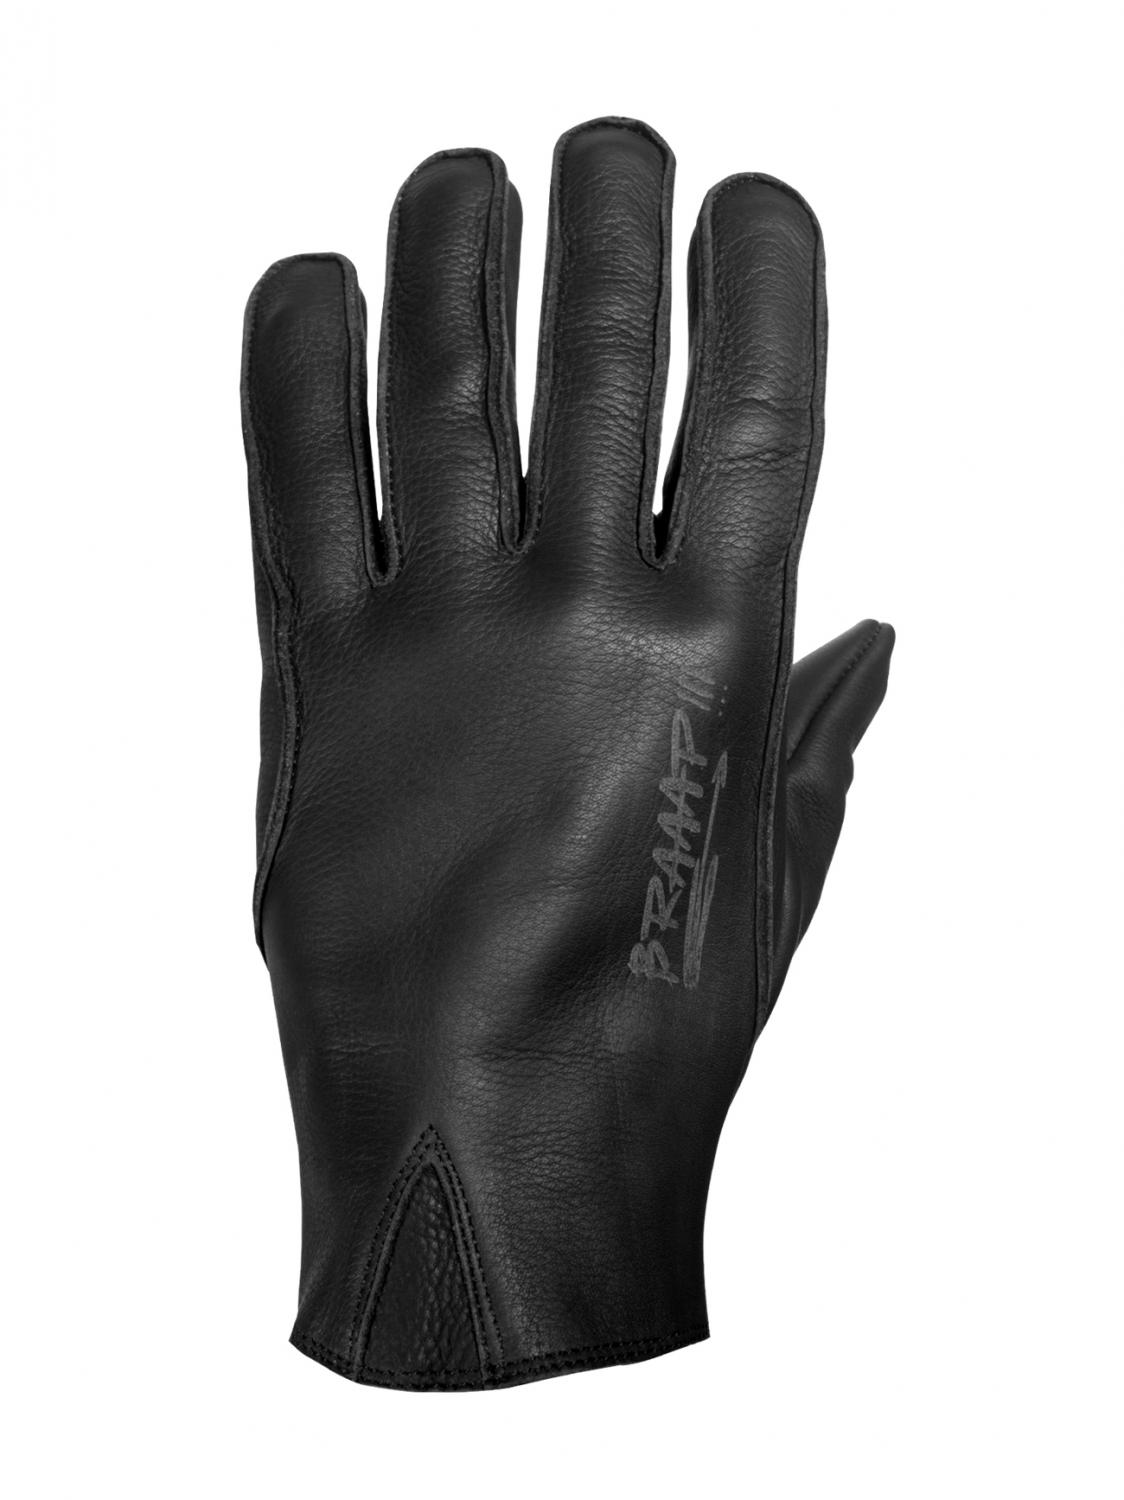 John Doe Ironhead Motorcycle Gloves, Black